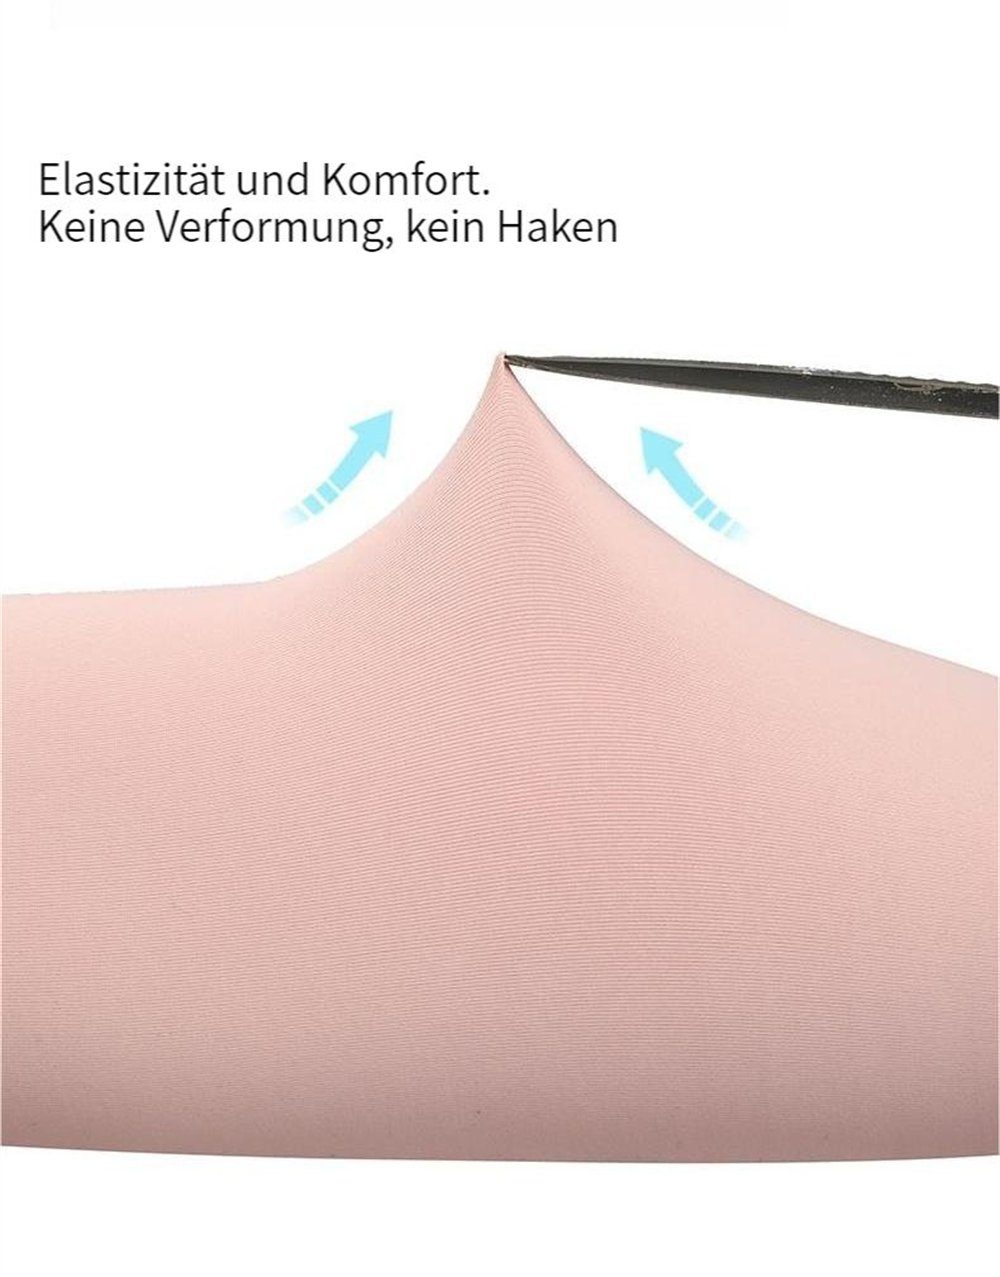 Armstulpen Ärmel Arm Sleeves Rosa Sommer-Sonnenschutz-Kampagne, Rouemi Kühlung Cooling